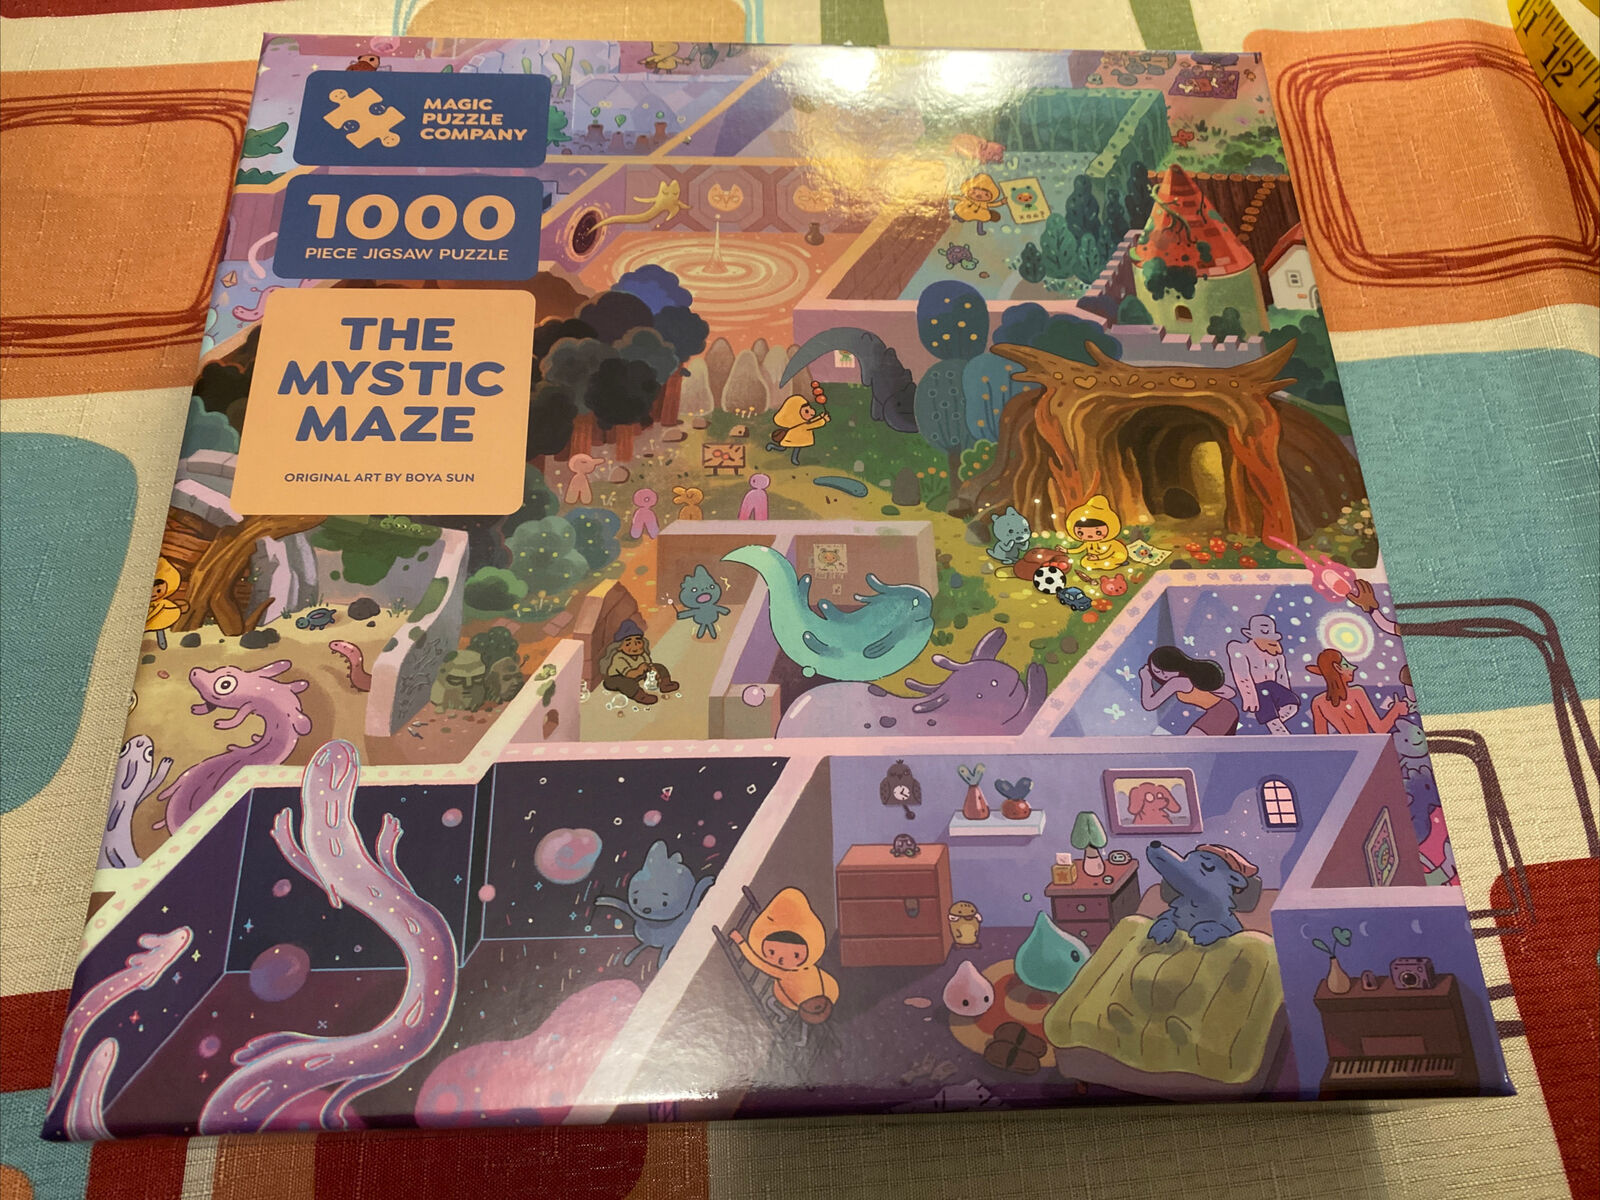 Magic Puzzle Company The Mystic Maze Jigsaw Puzzle BGZ111372 for sale online 1000 Pieces 